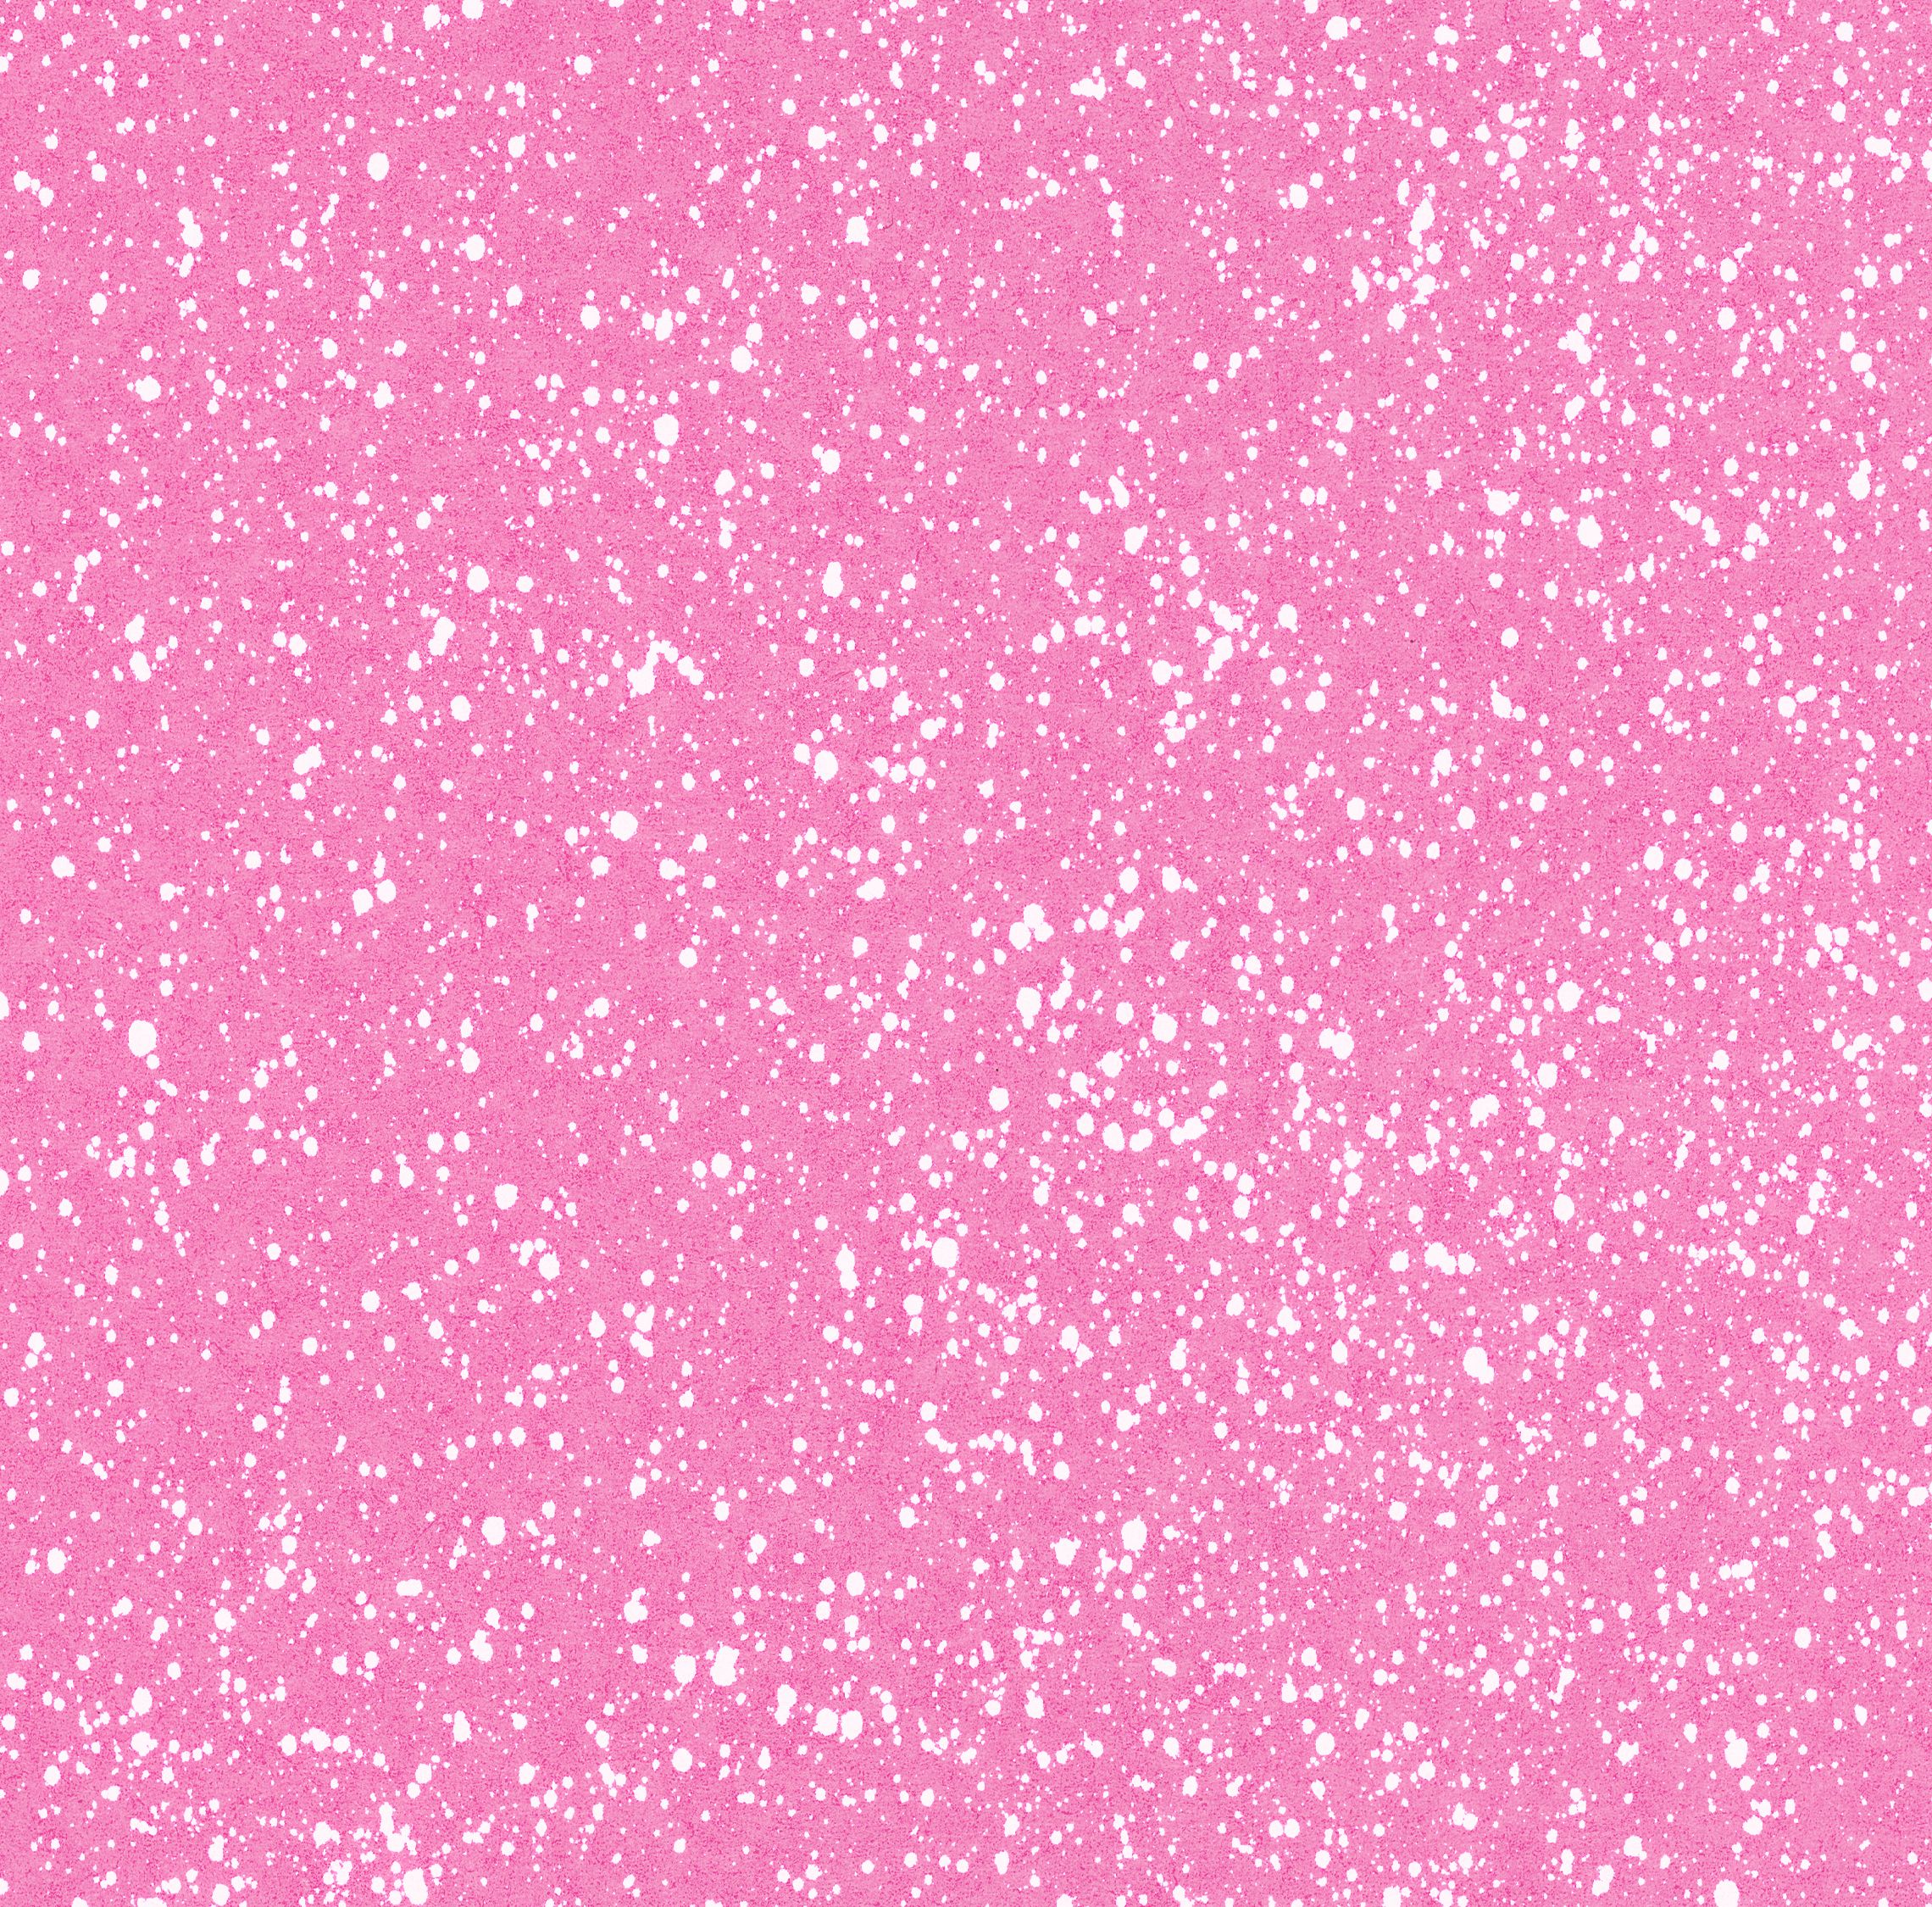 Pink Splatter